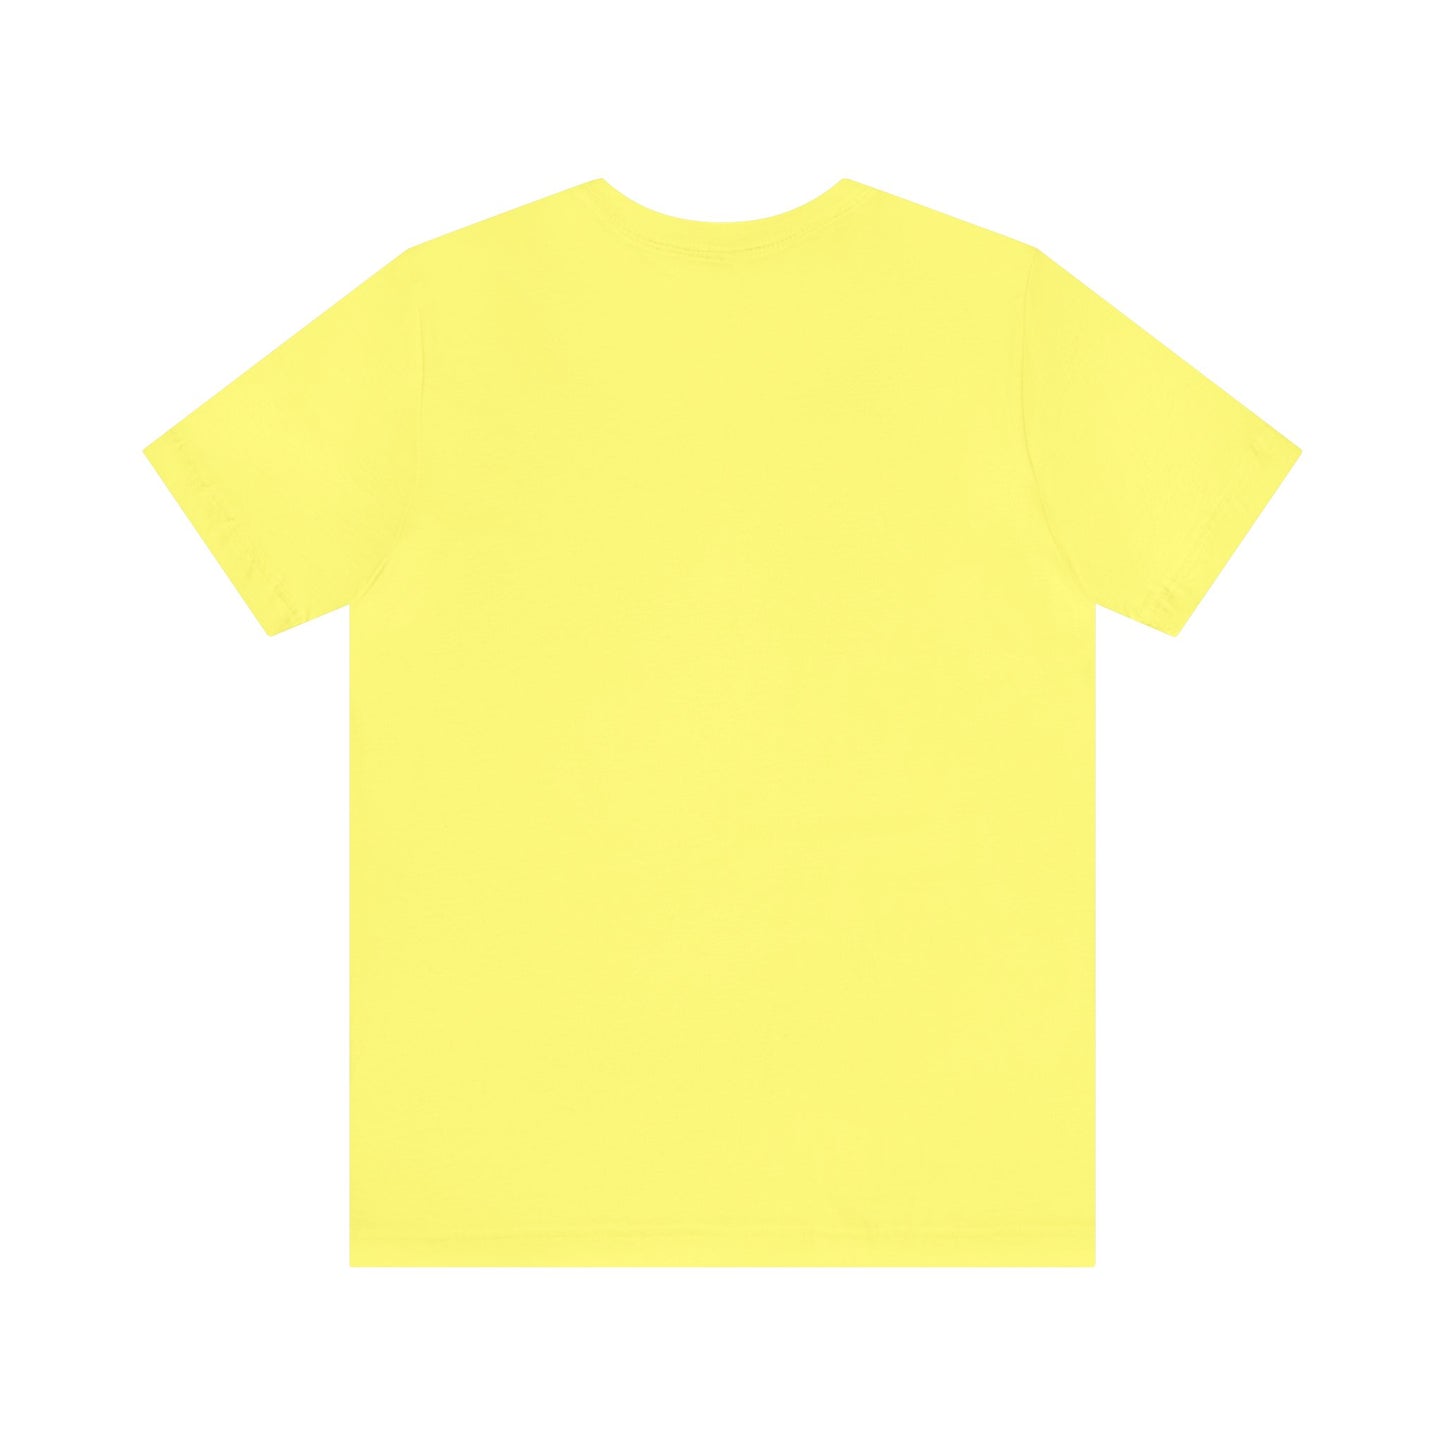 Broqe Fashionably Broke T-Shirt - Unisex Jersey Short Sleeve Tee